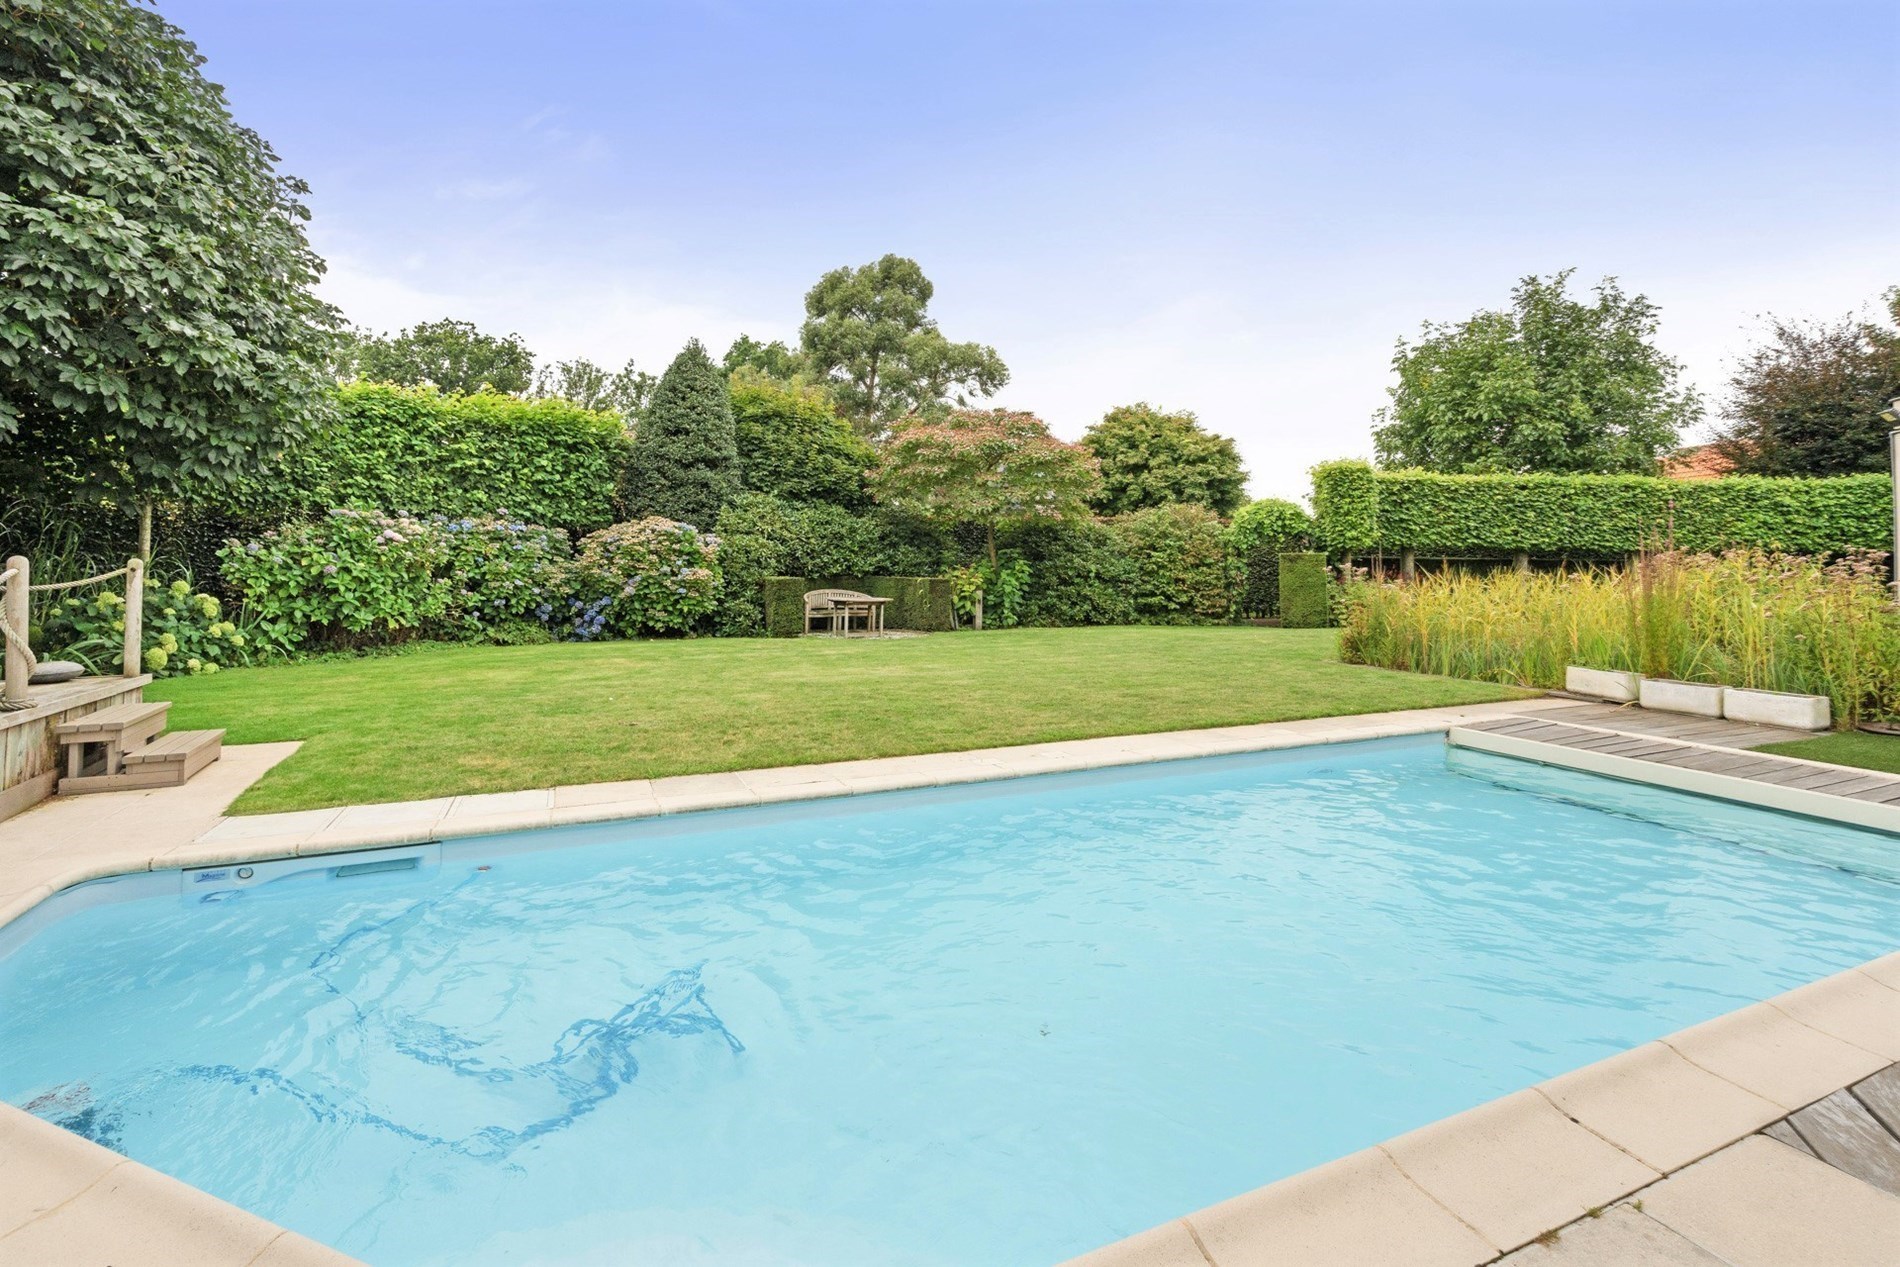 Grote villa met prachtige tuin (zwembad) te Maldegem foto 3